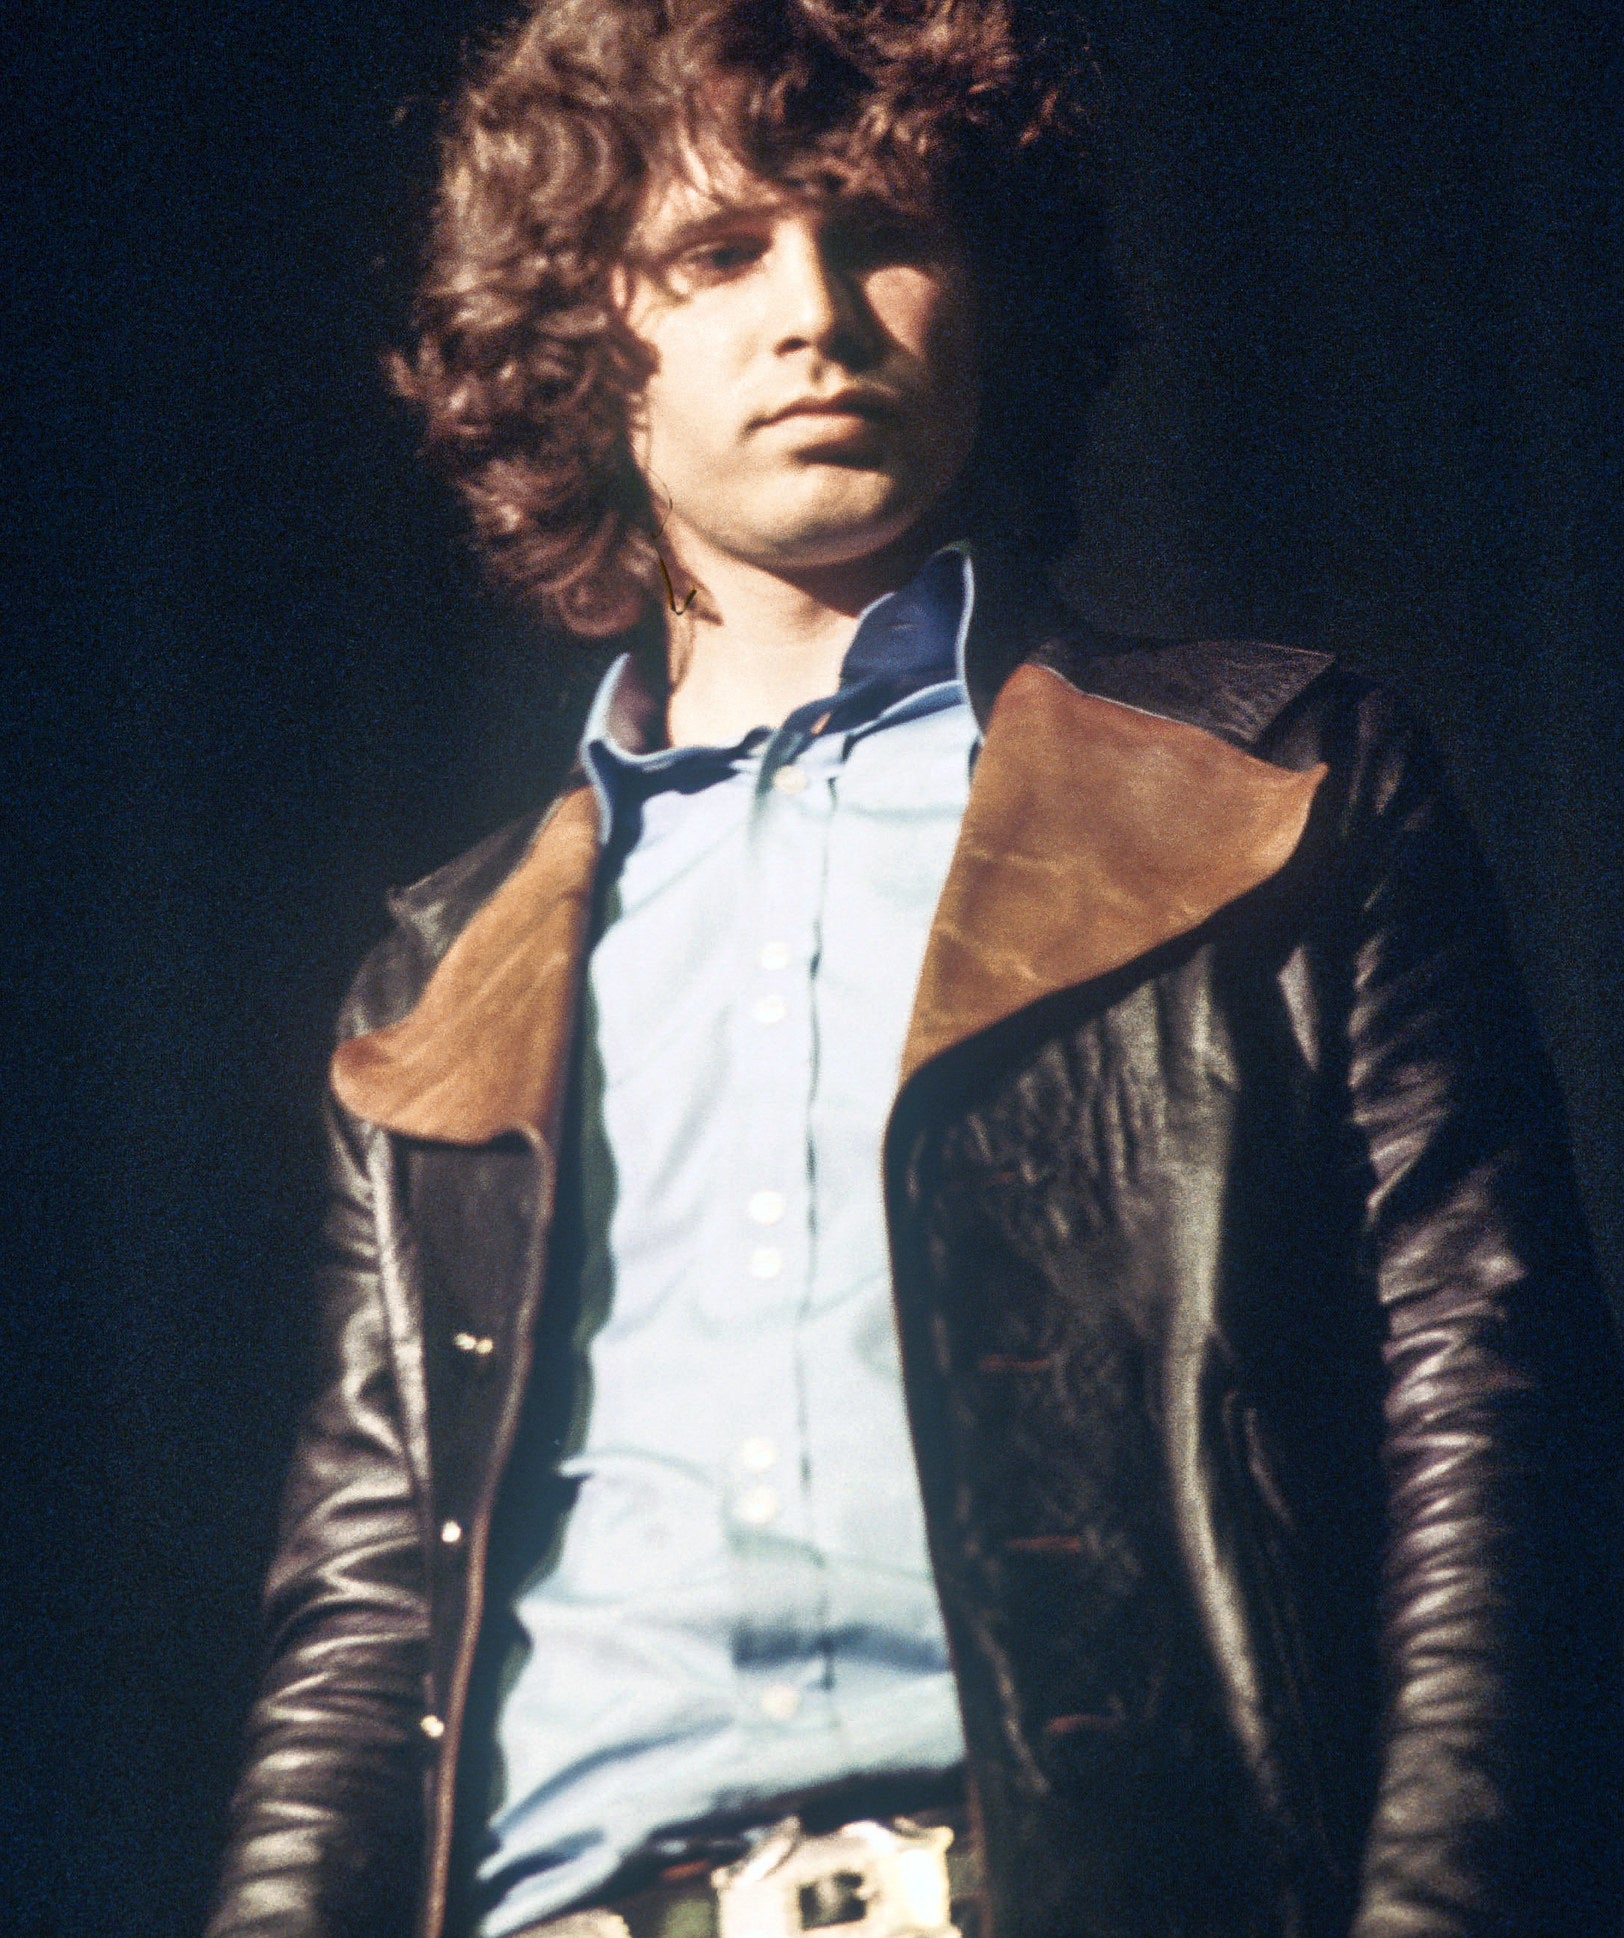 Jim Morrison looking down at something